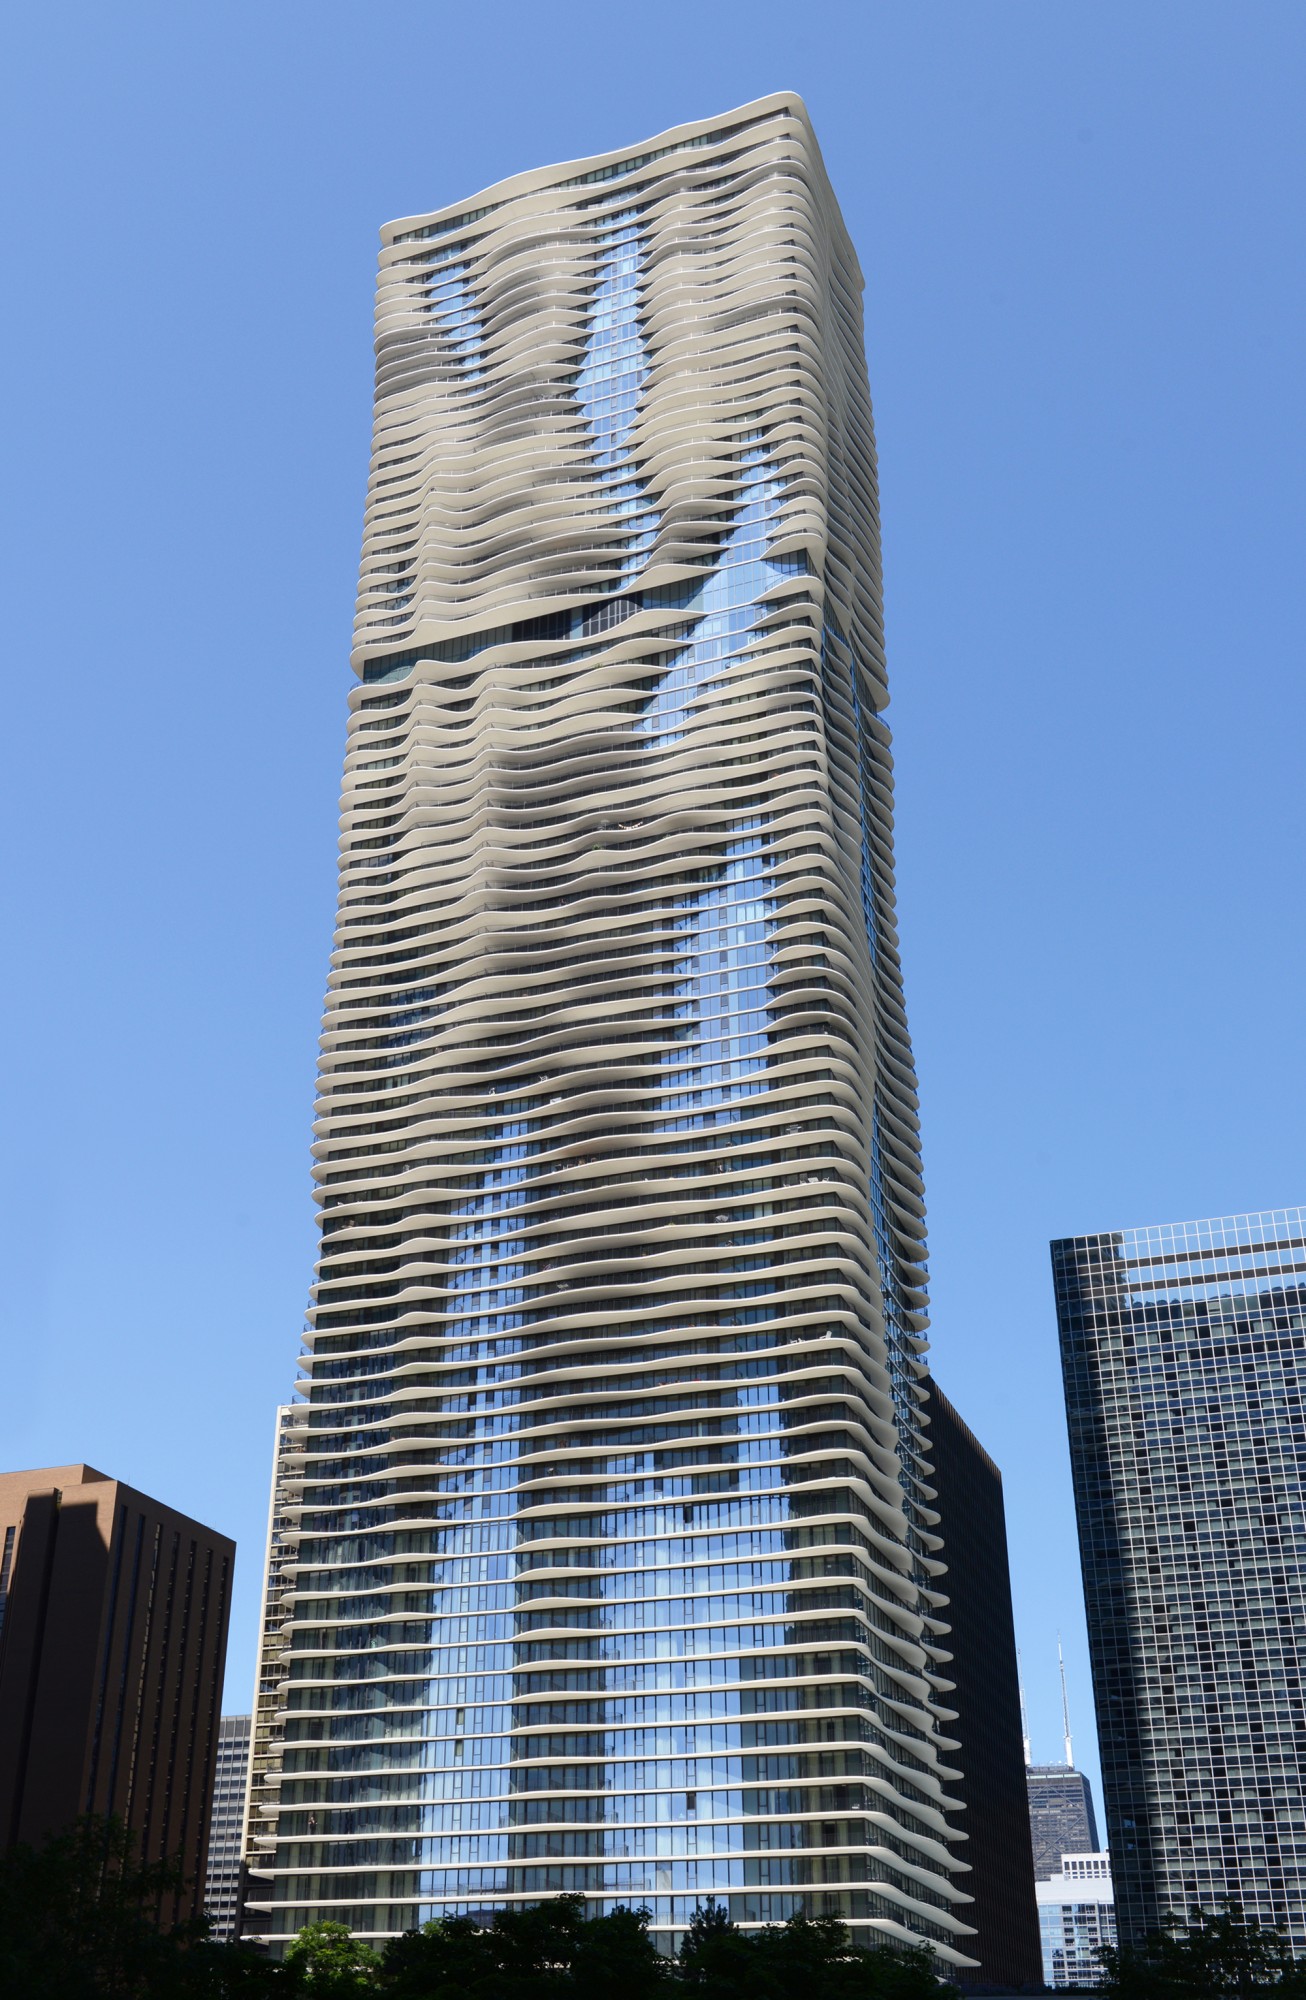 Aqua · Buildings of Chicago · Chicago Architecture Foundation - CAF